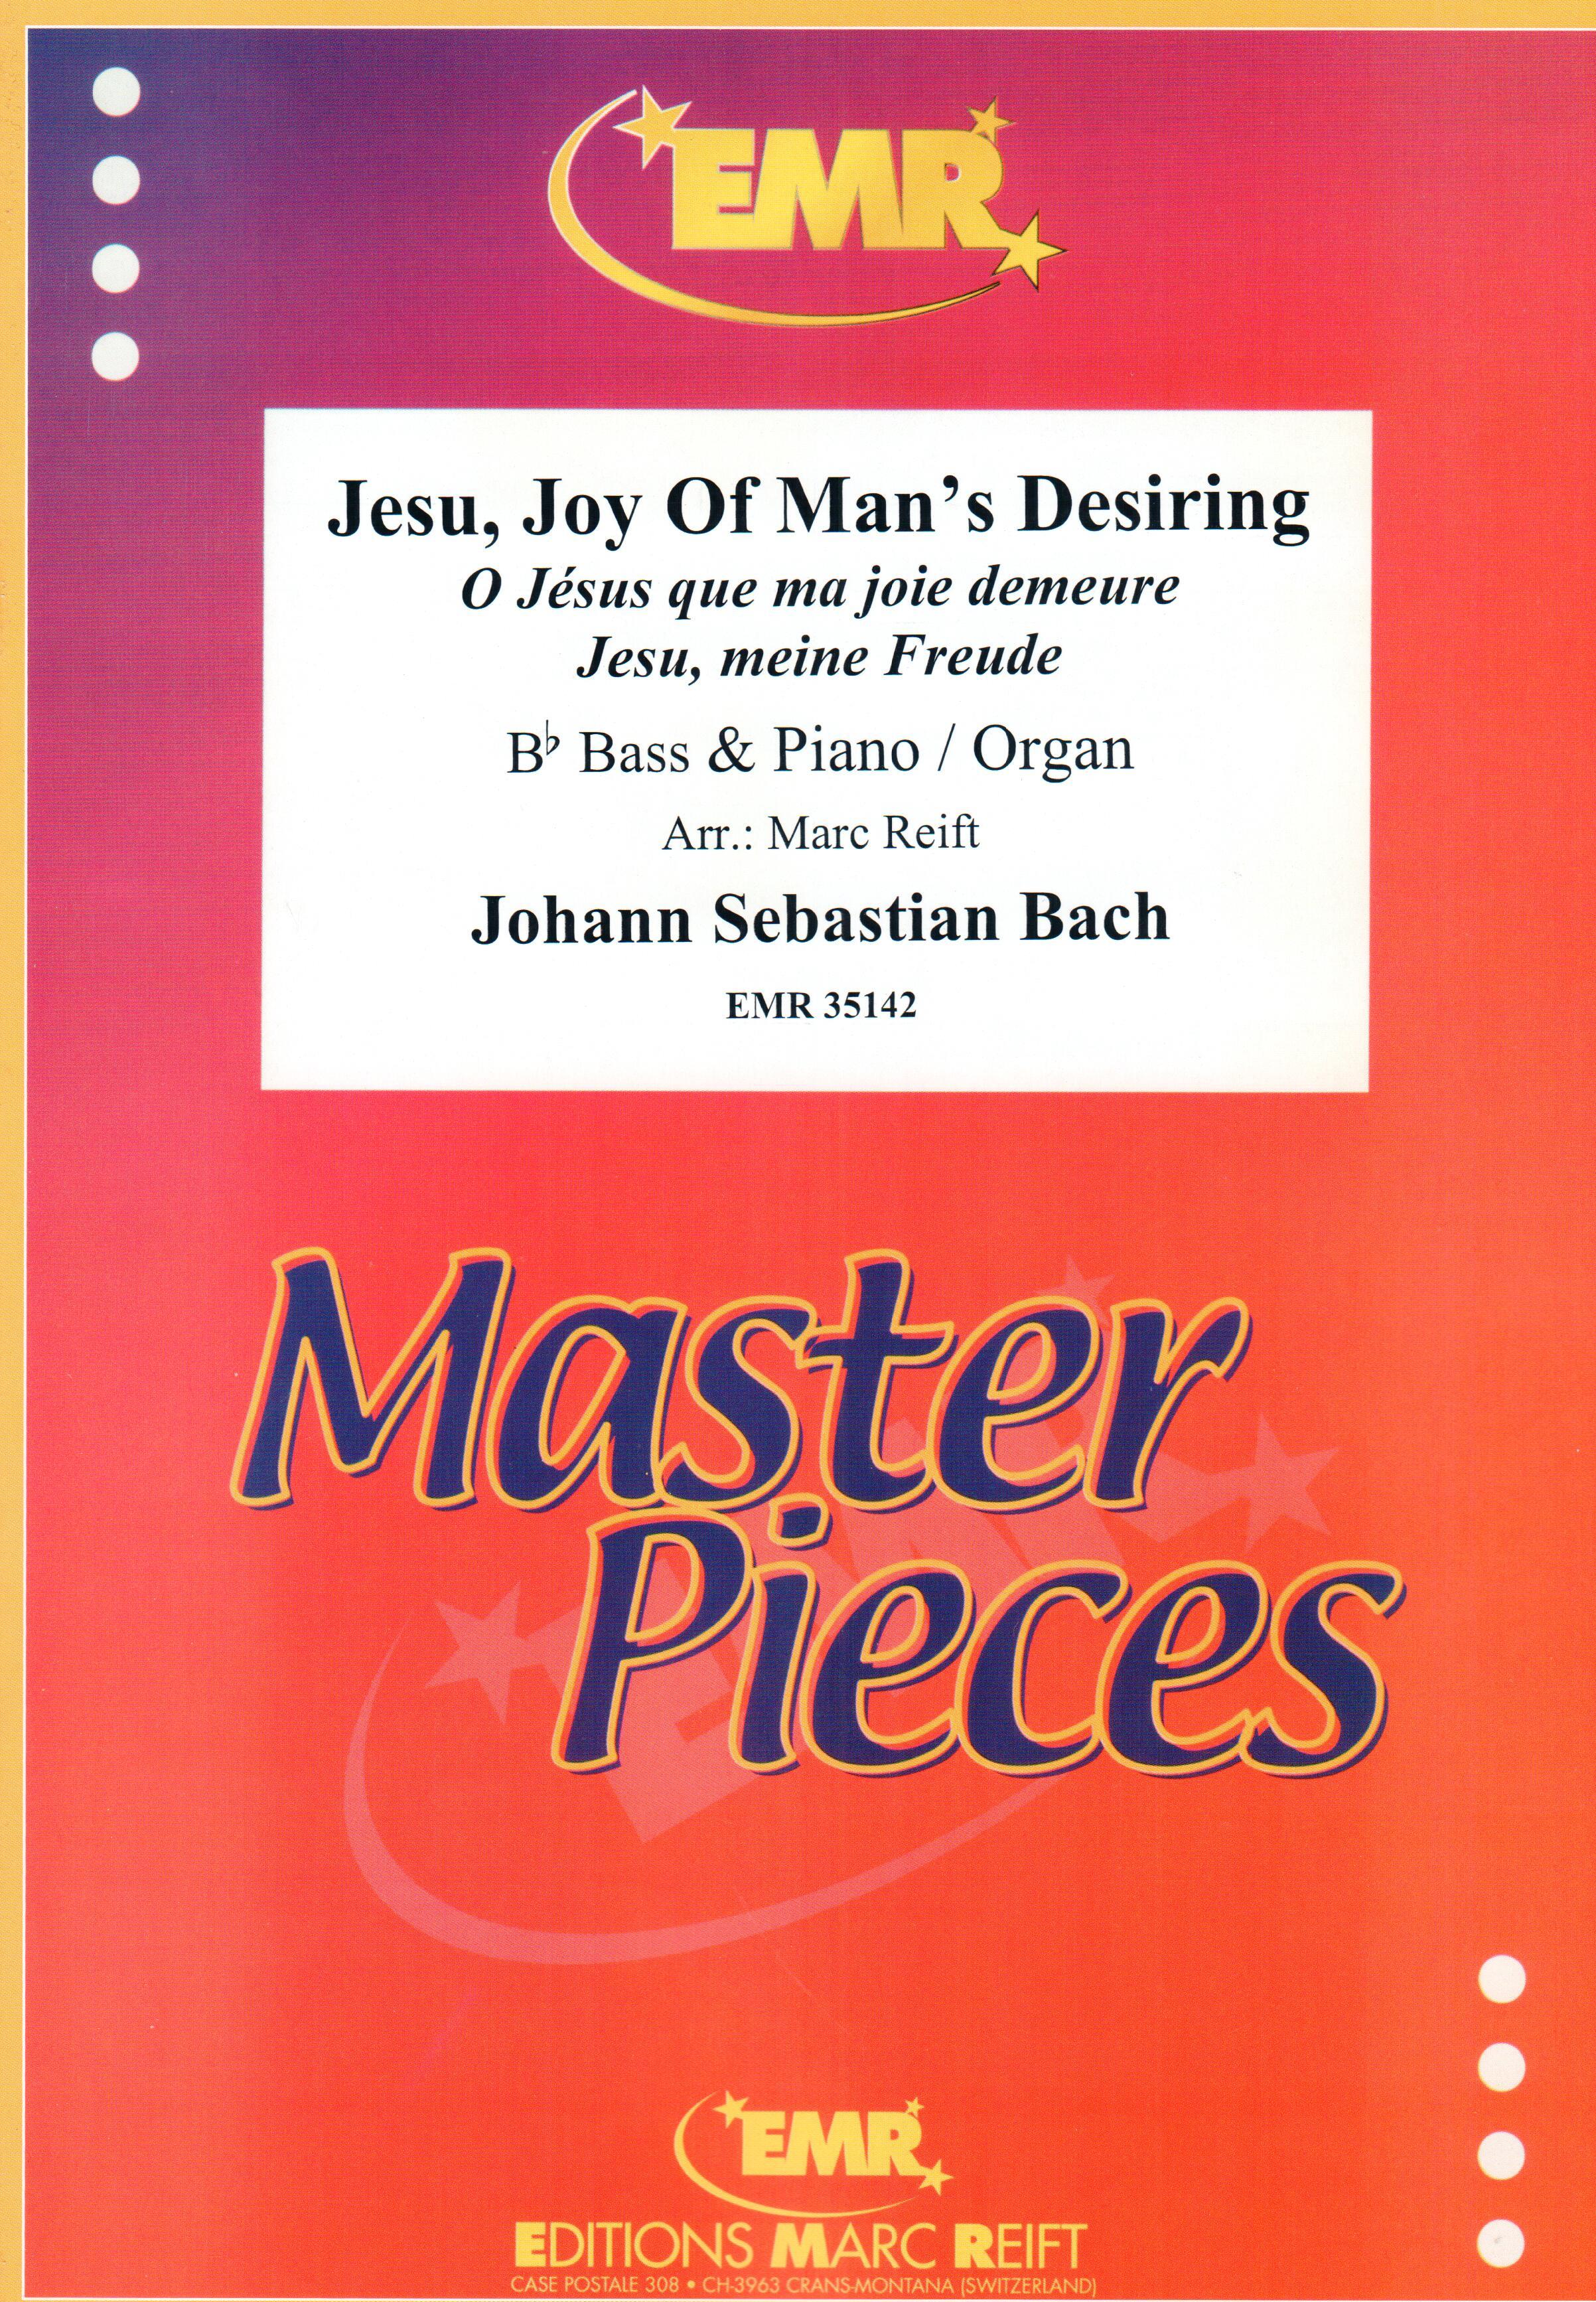 JESU, JOY OF MAN'S DESIRING, SOLOS - E♭. Bass